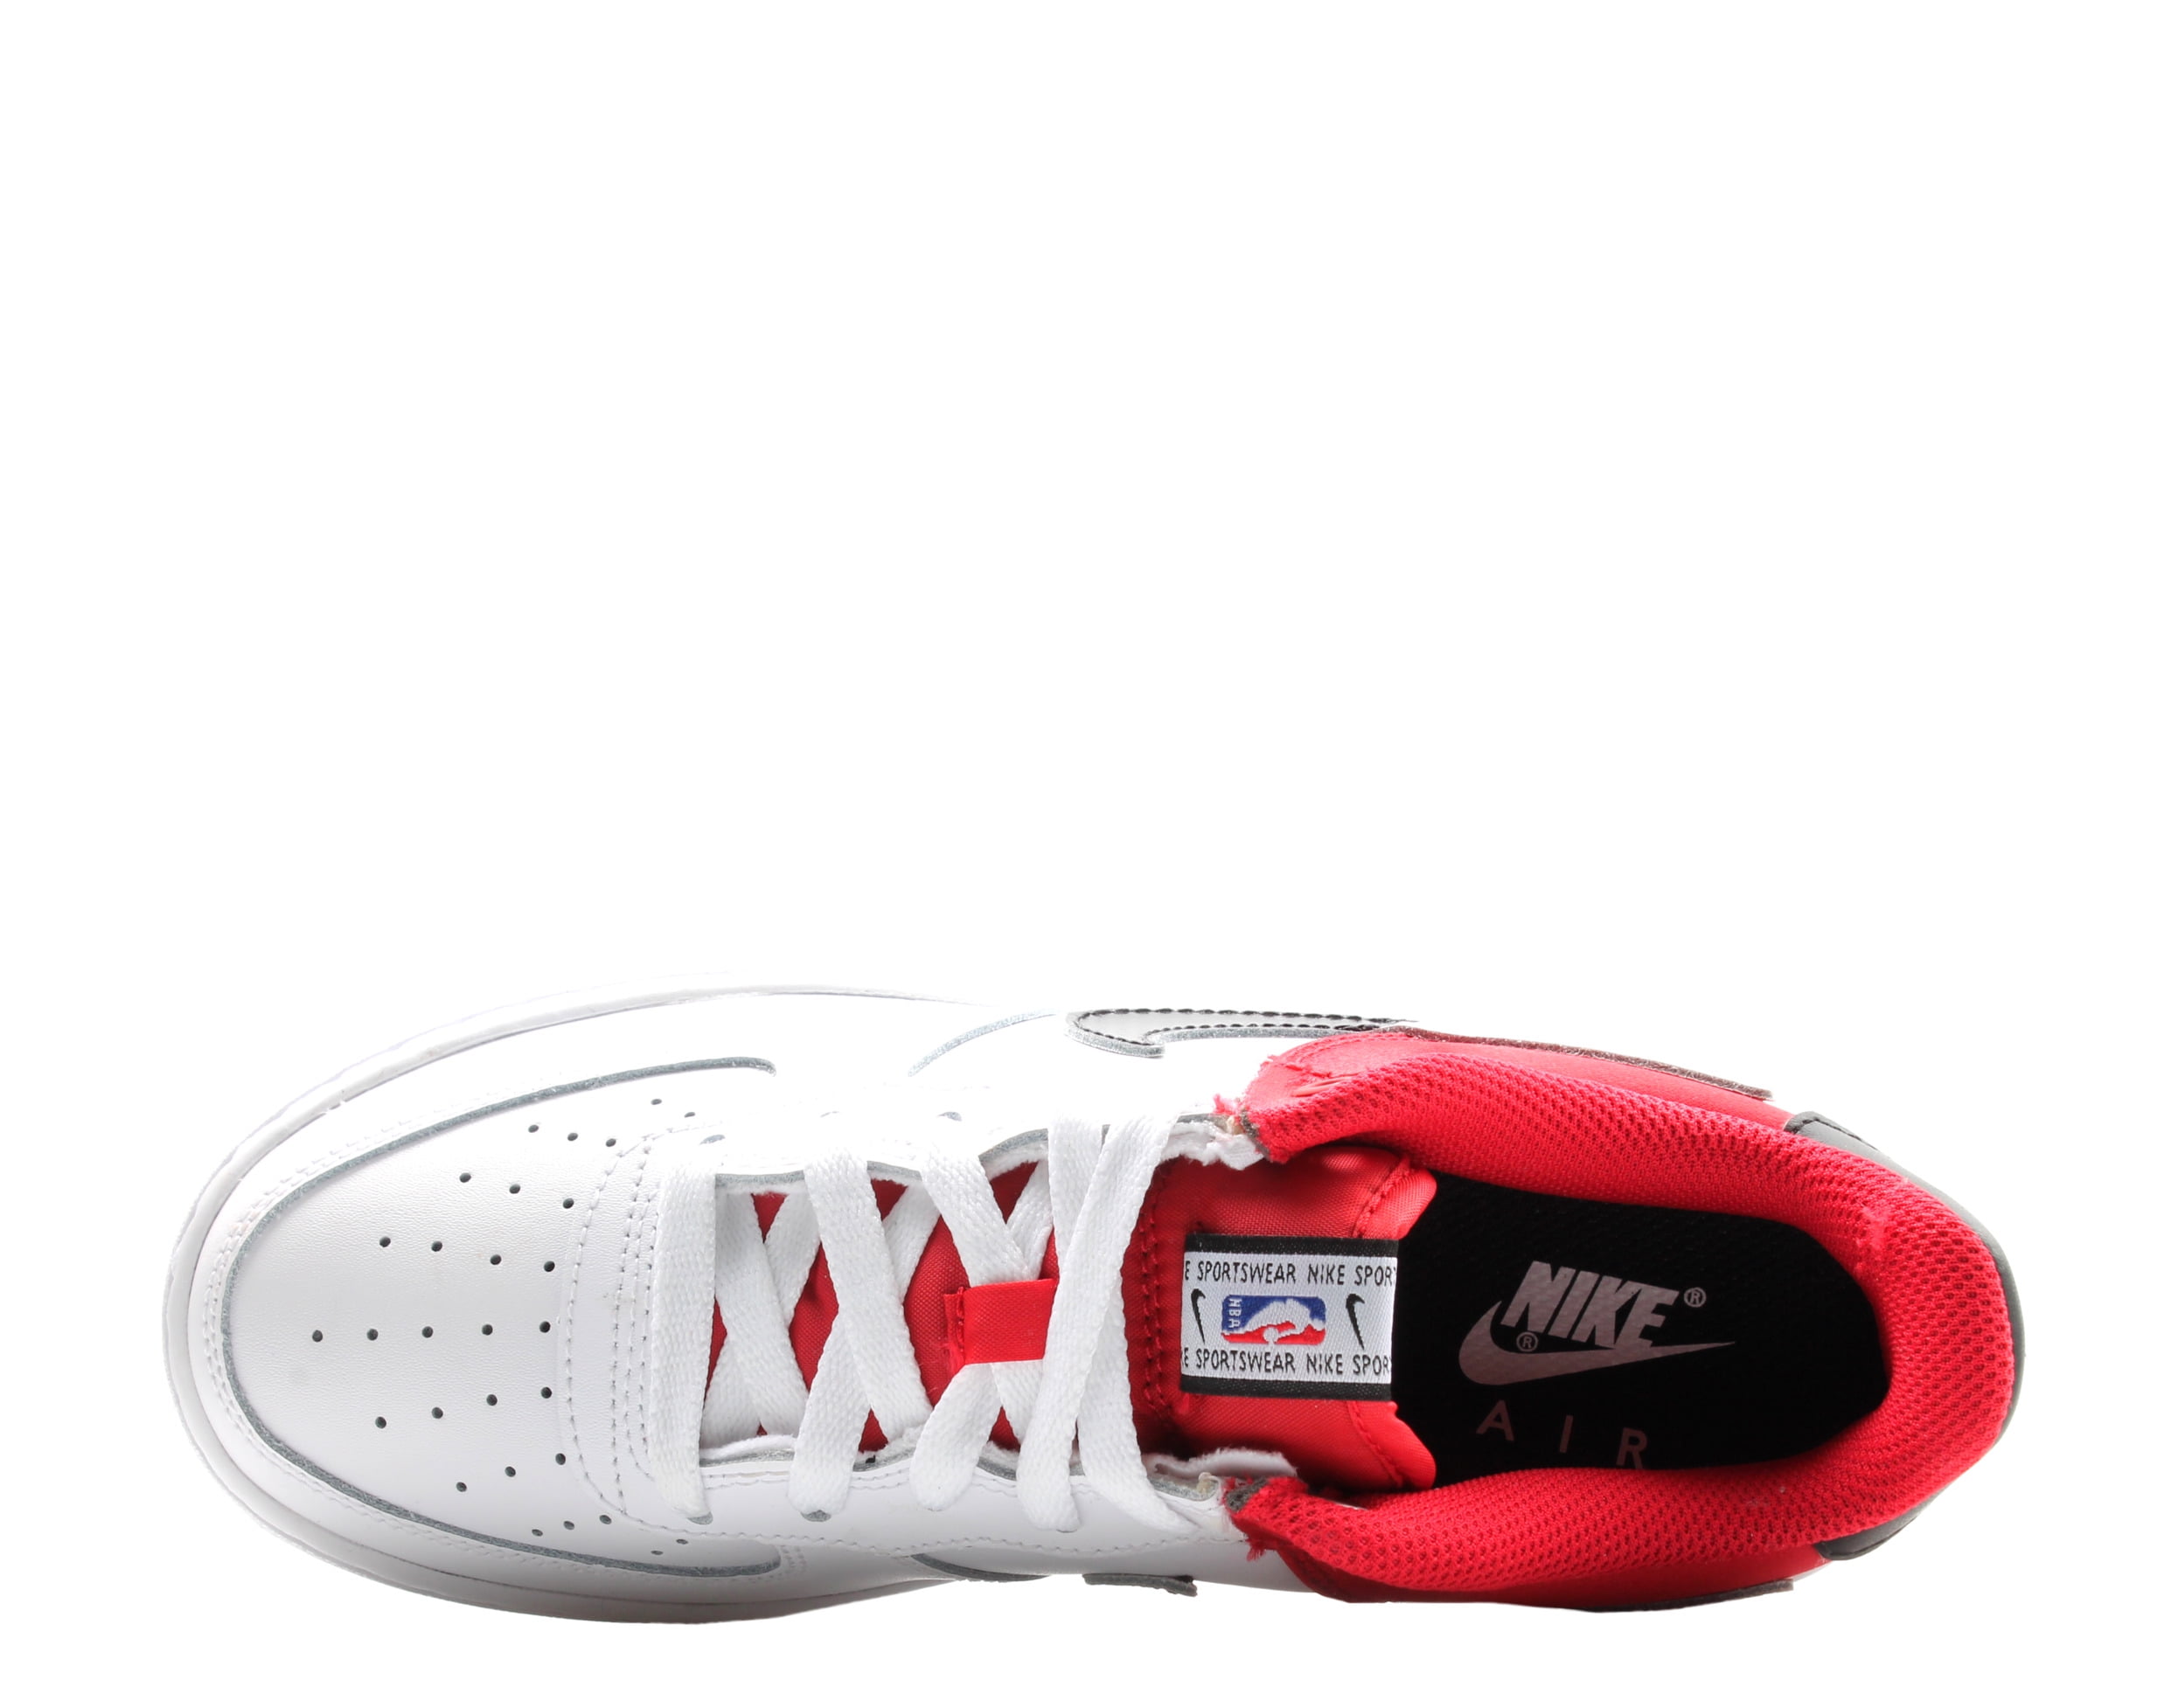 Nike Air Force 1 LV8 (GS) Big Kids' Shoes Habanero Red-White-Black